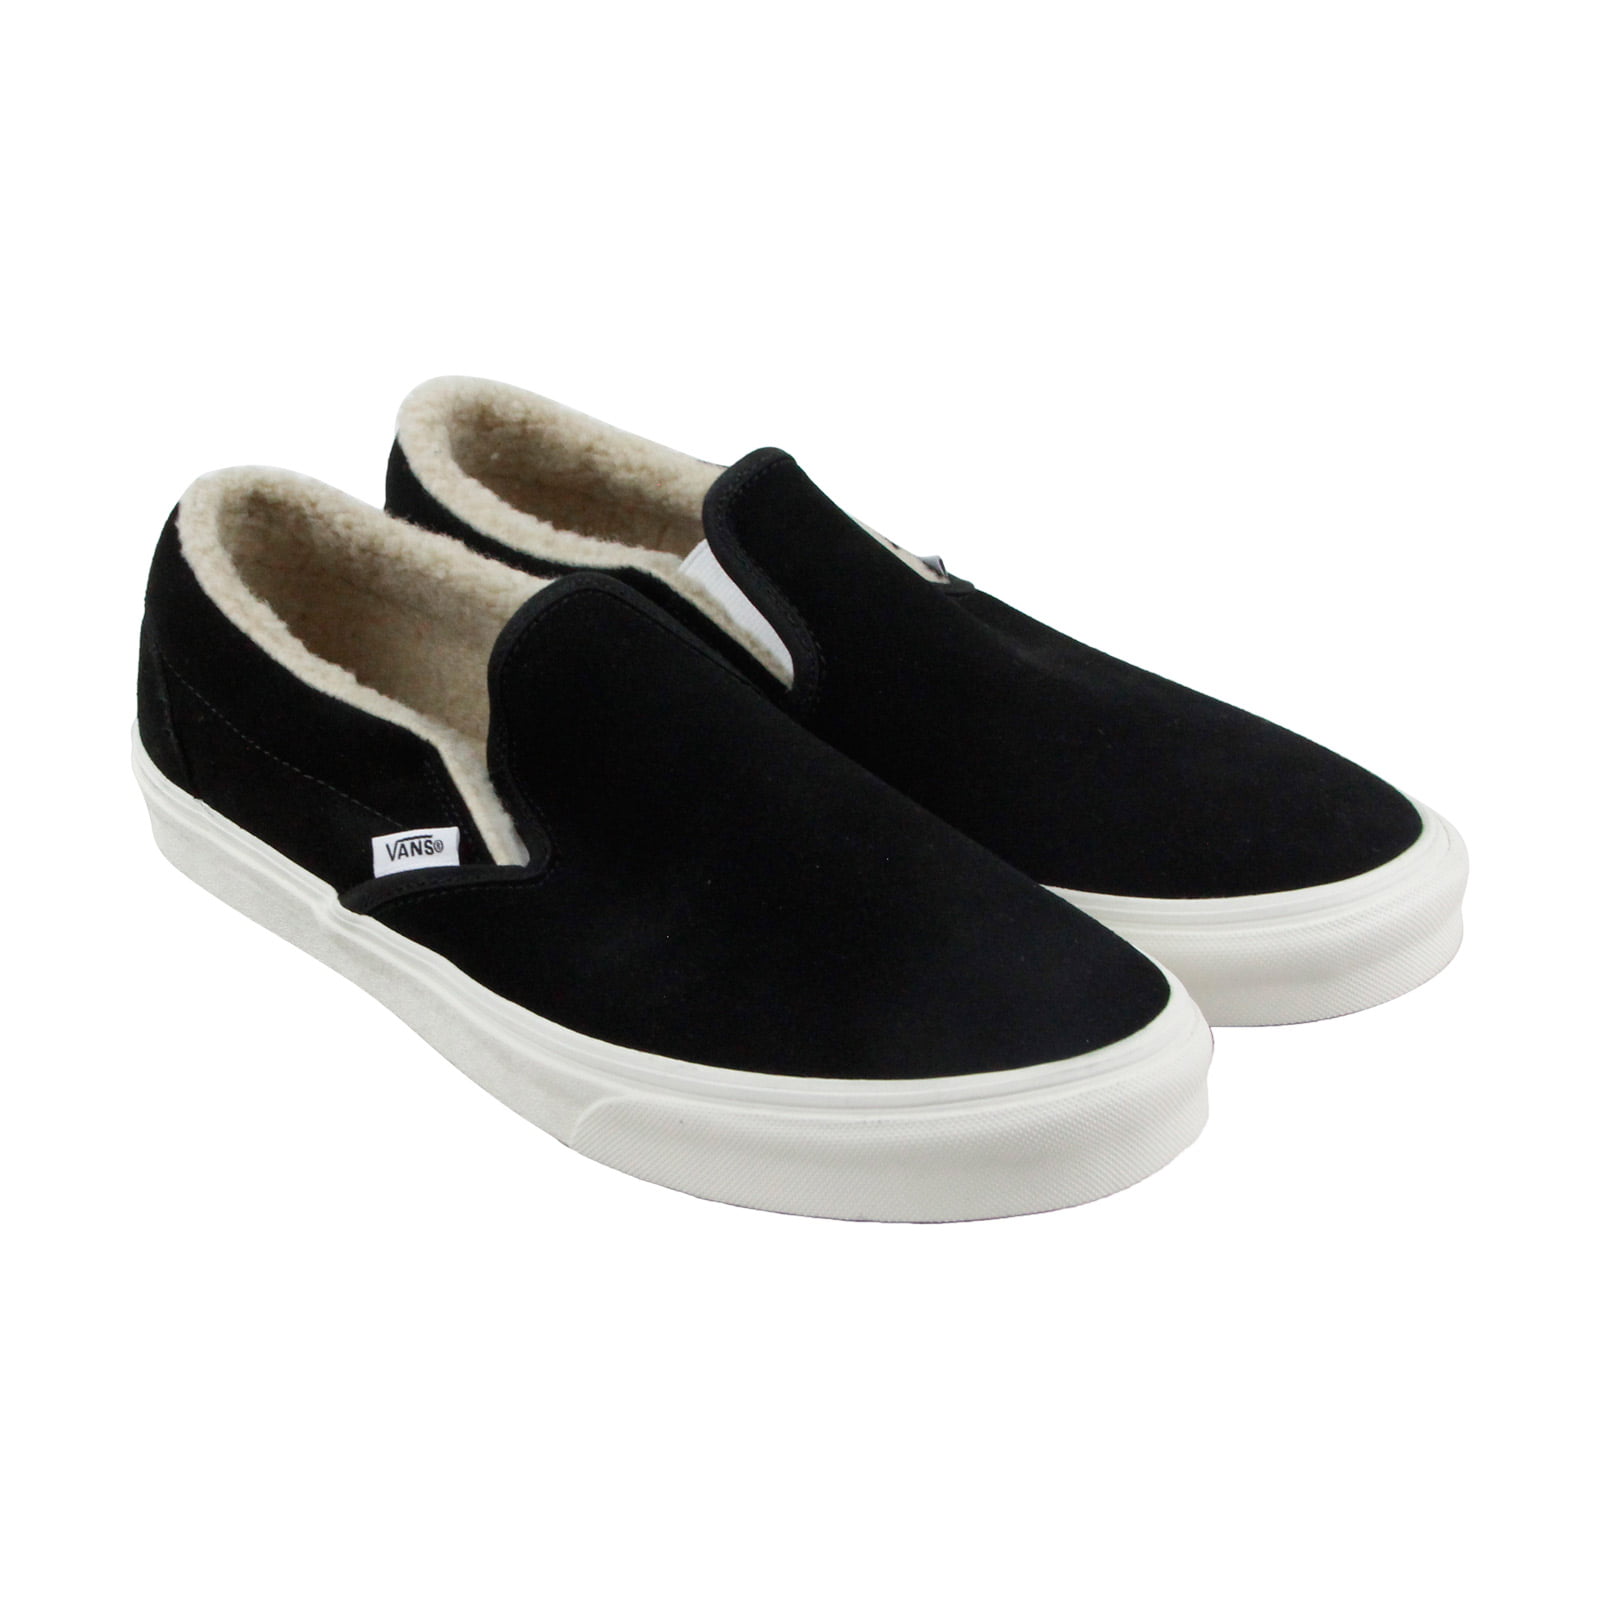 Vans Classic Slip On Mens Black Suede Slip On Sneakers Shoes - Walmart.com